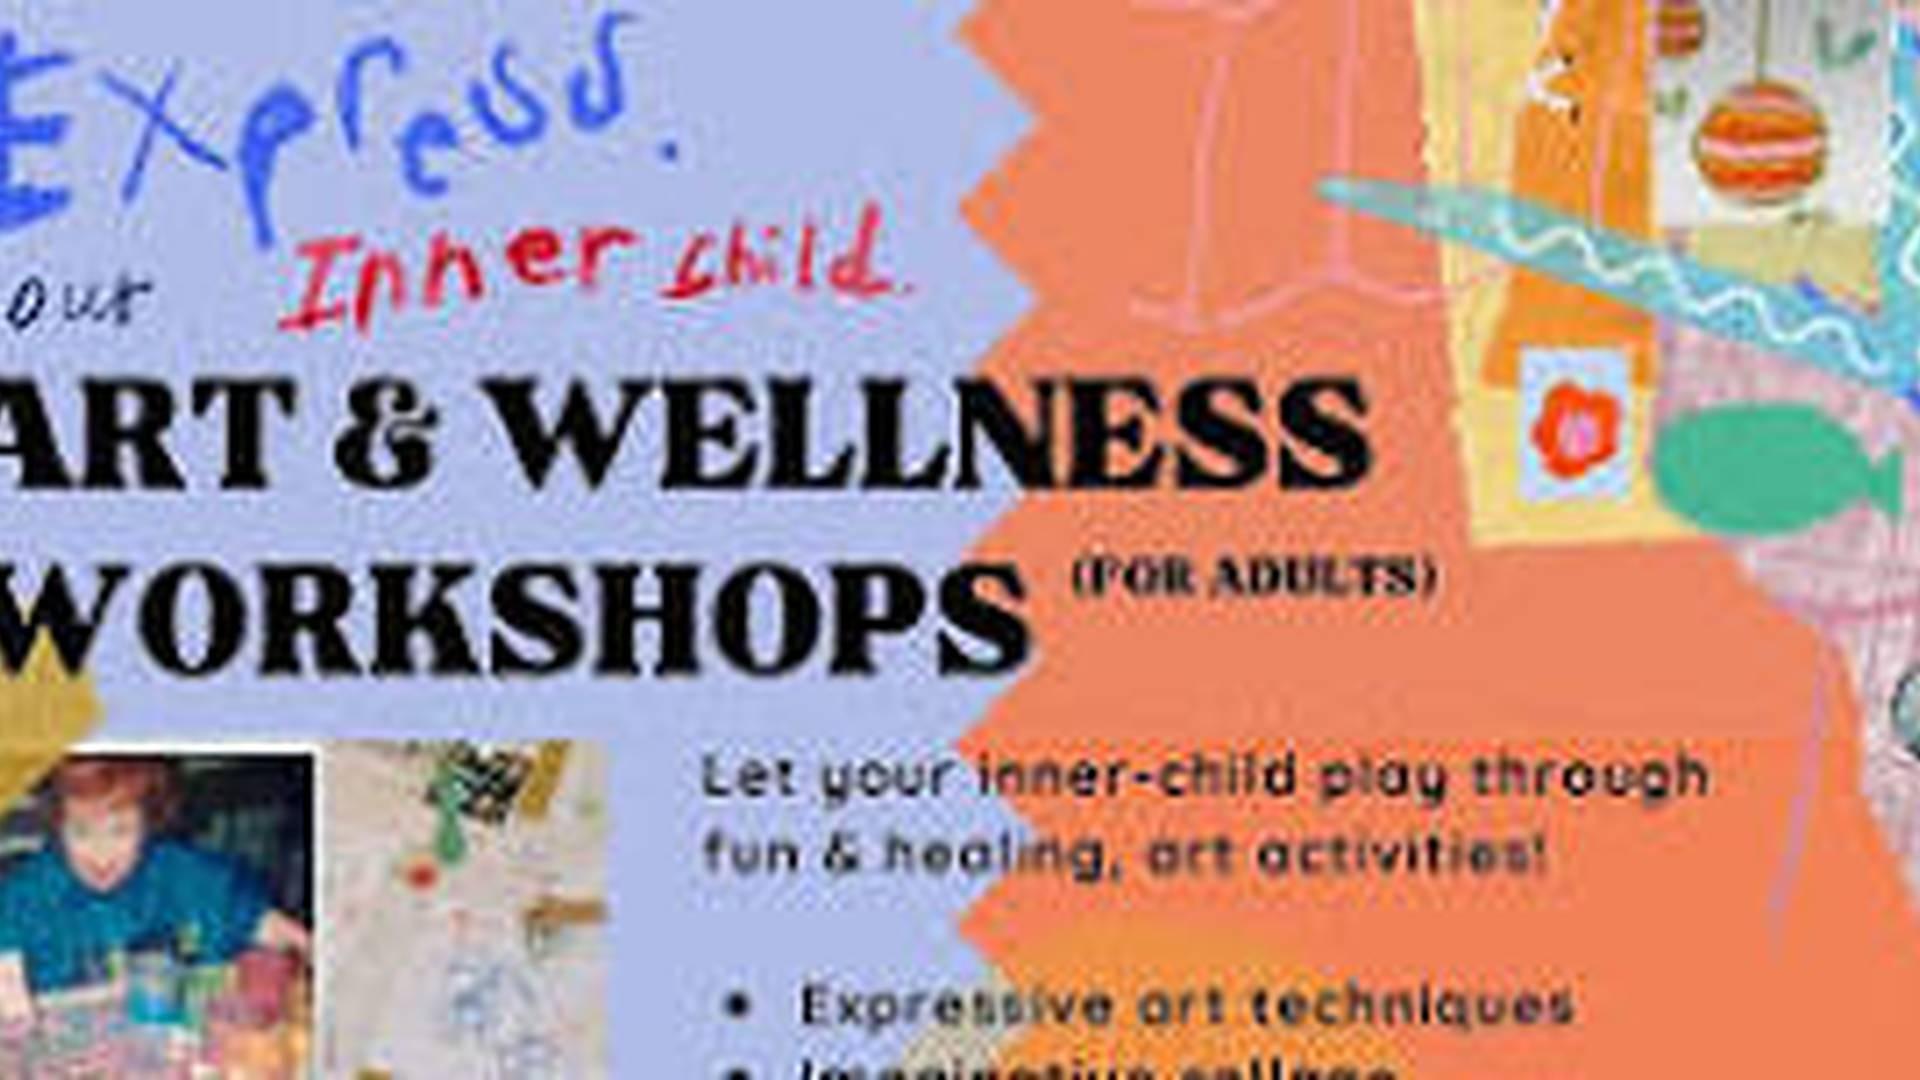 Express your Inner-Child Art & Wellness Workshop photo